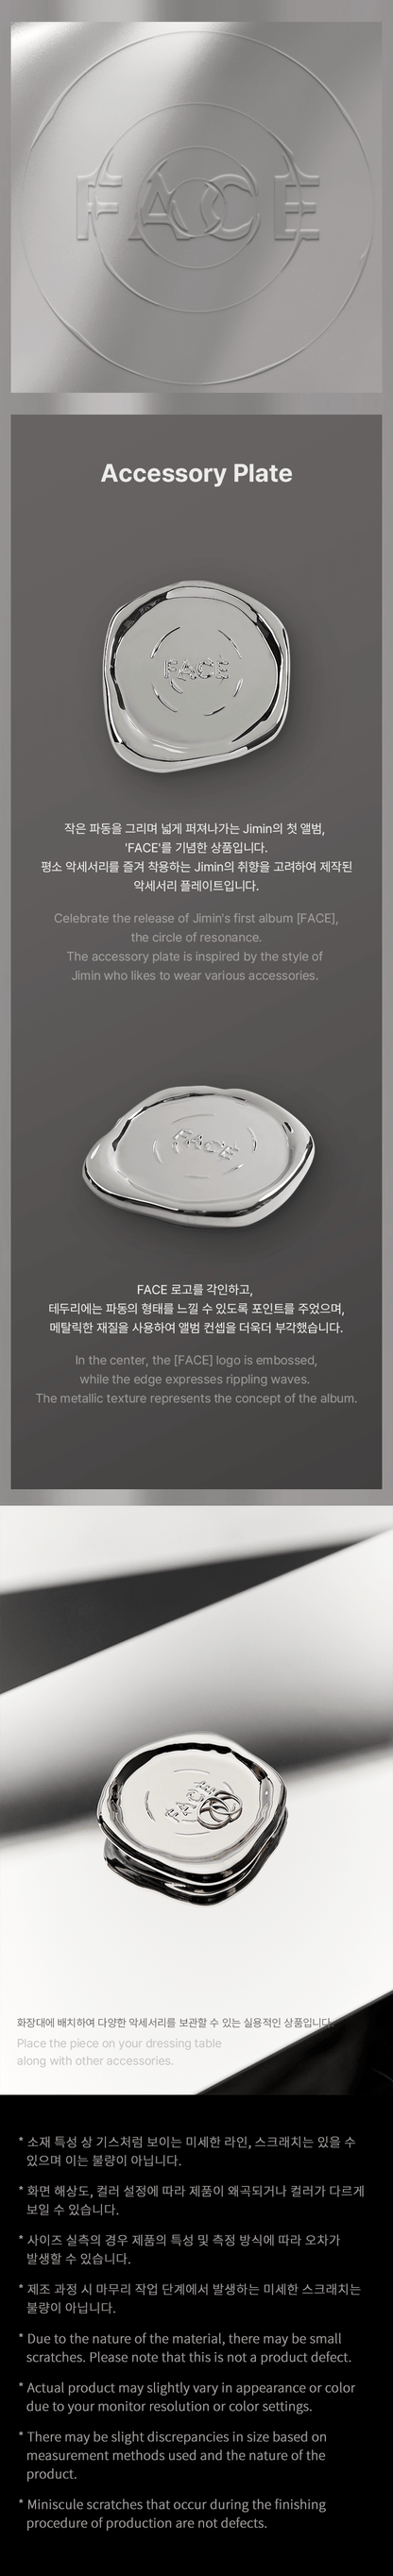 JIMIN (BTS) 'FACE' Accessory Plate